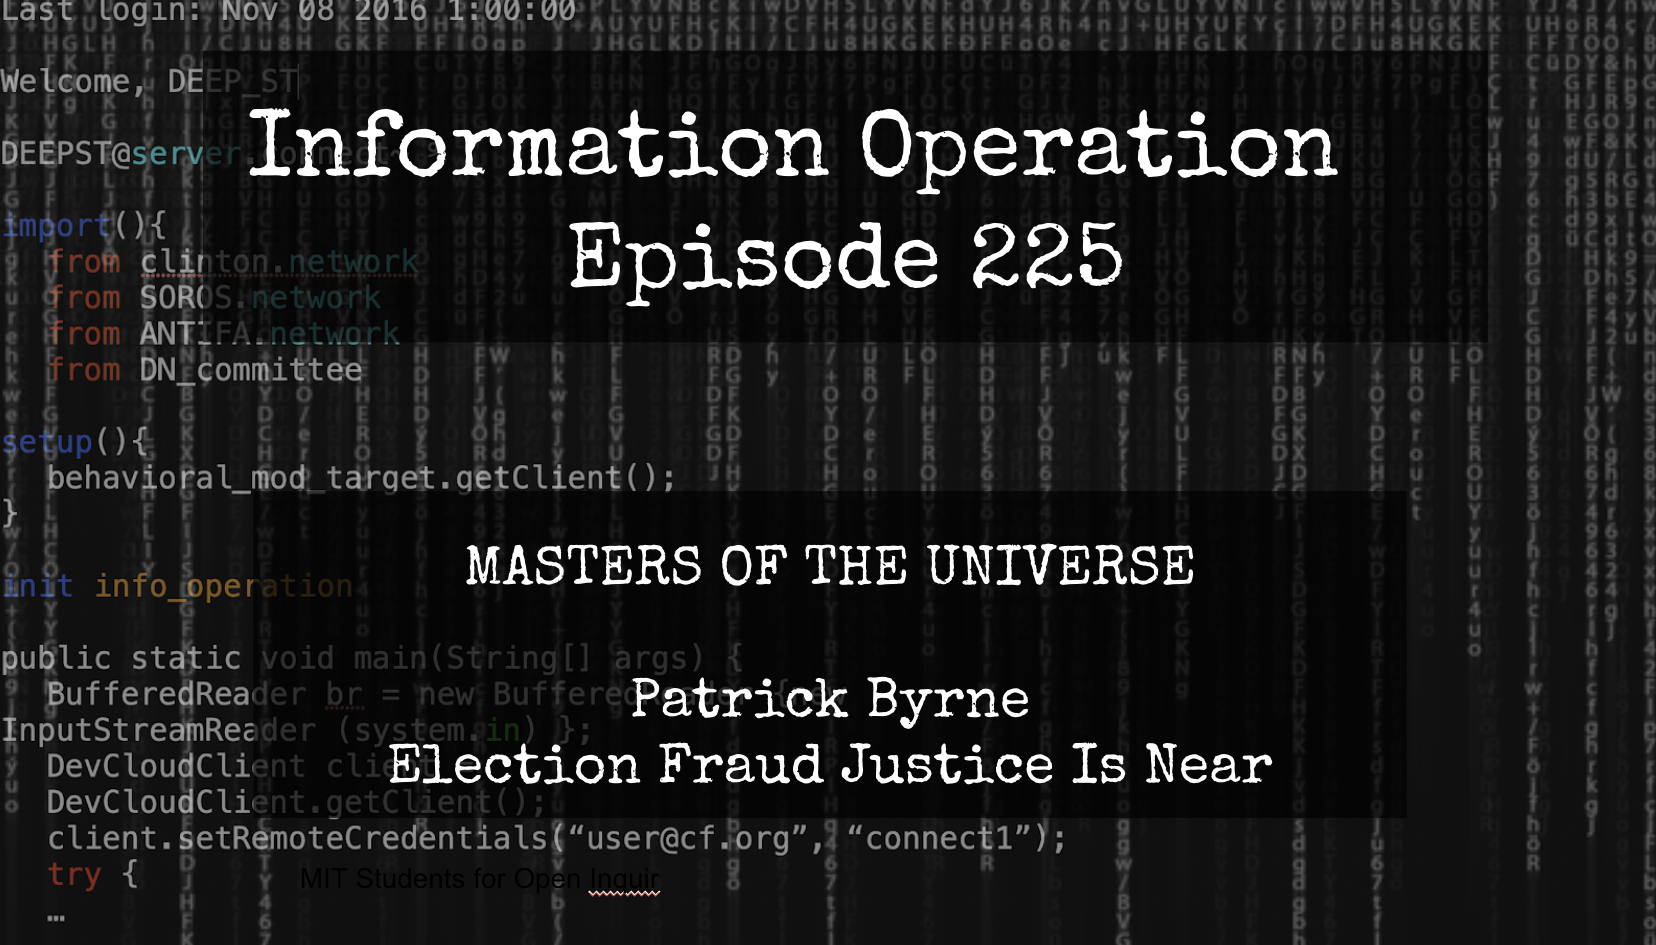 LIVE 10am EST: IO Episode 225 - Patrick Byrne - Justice Is Coming